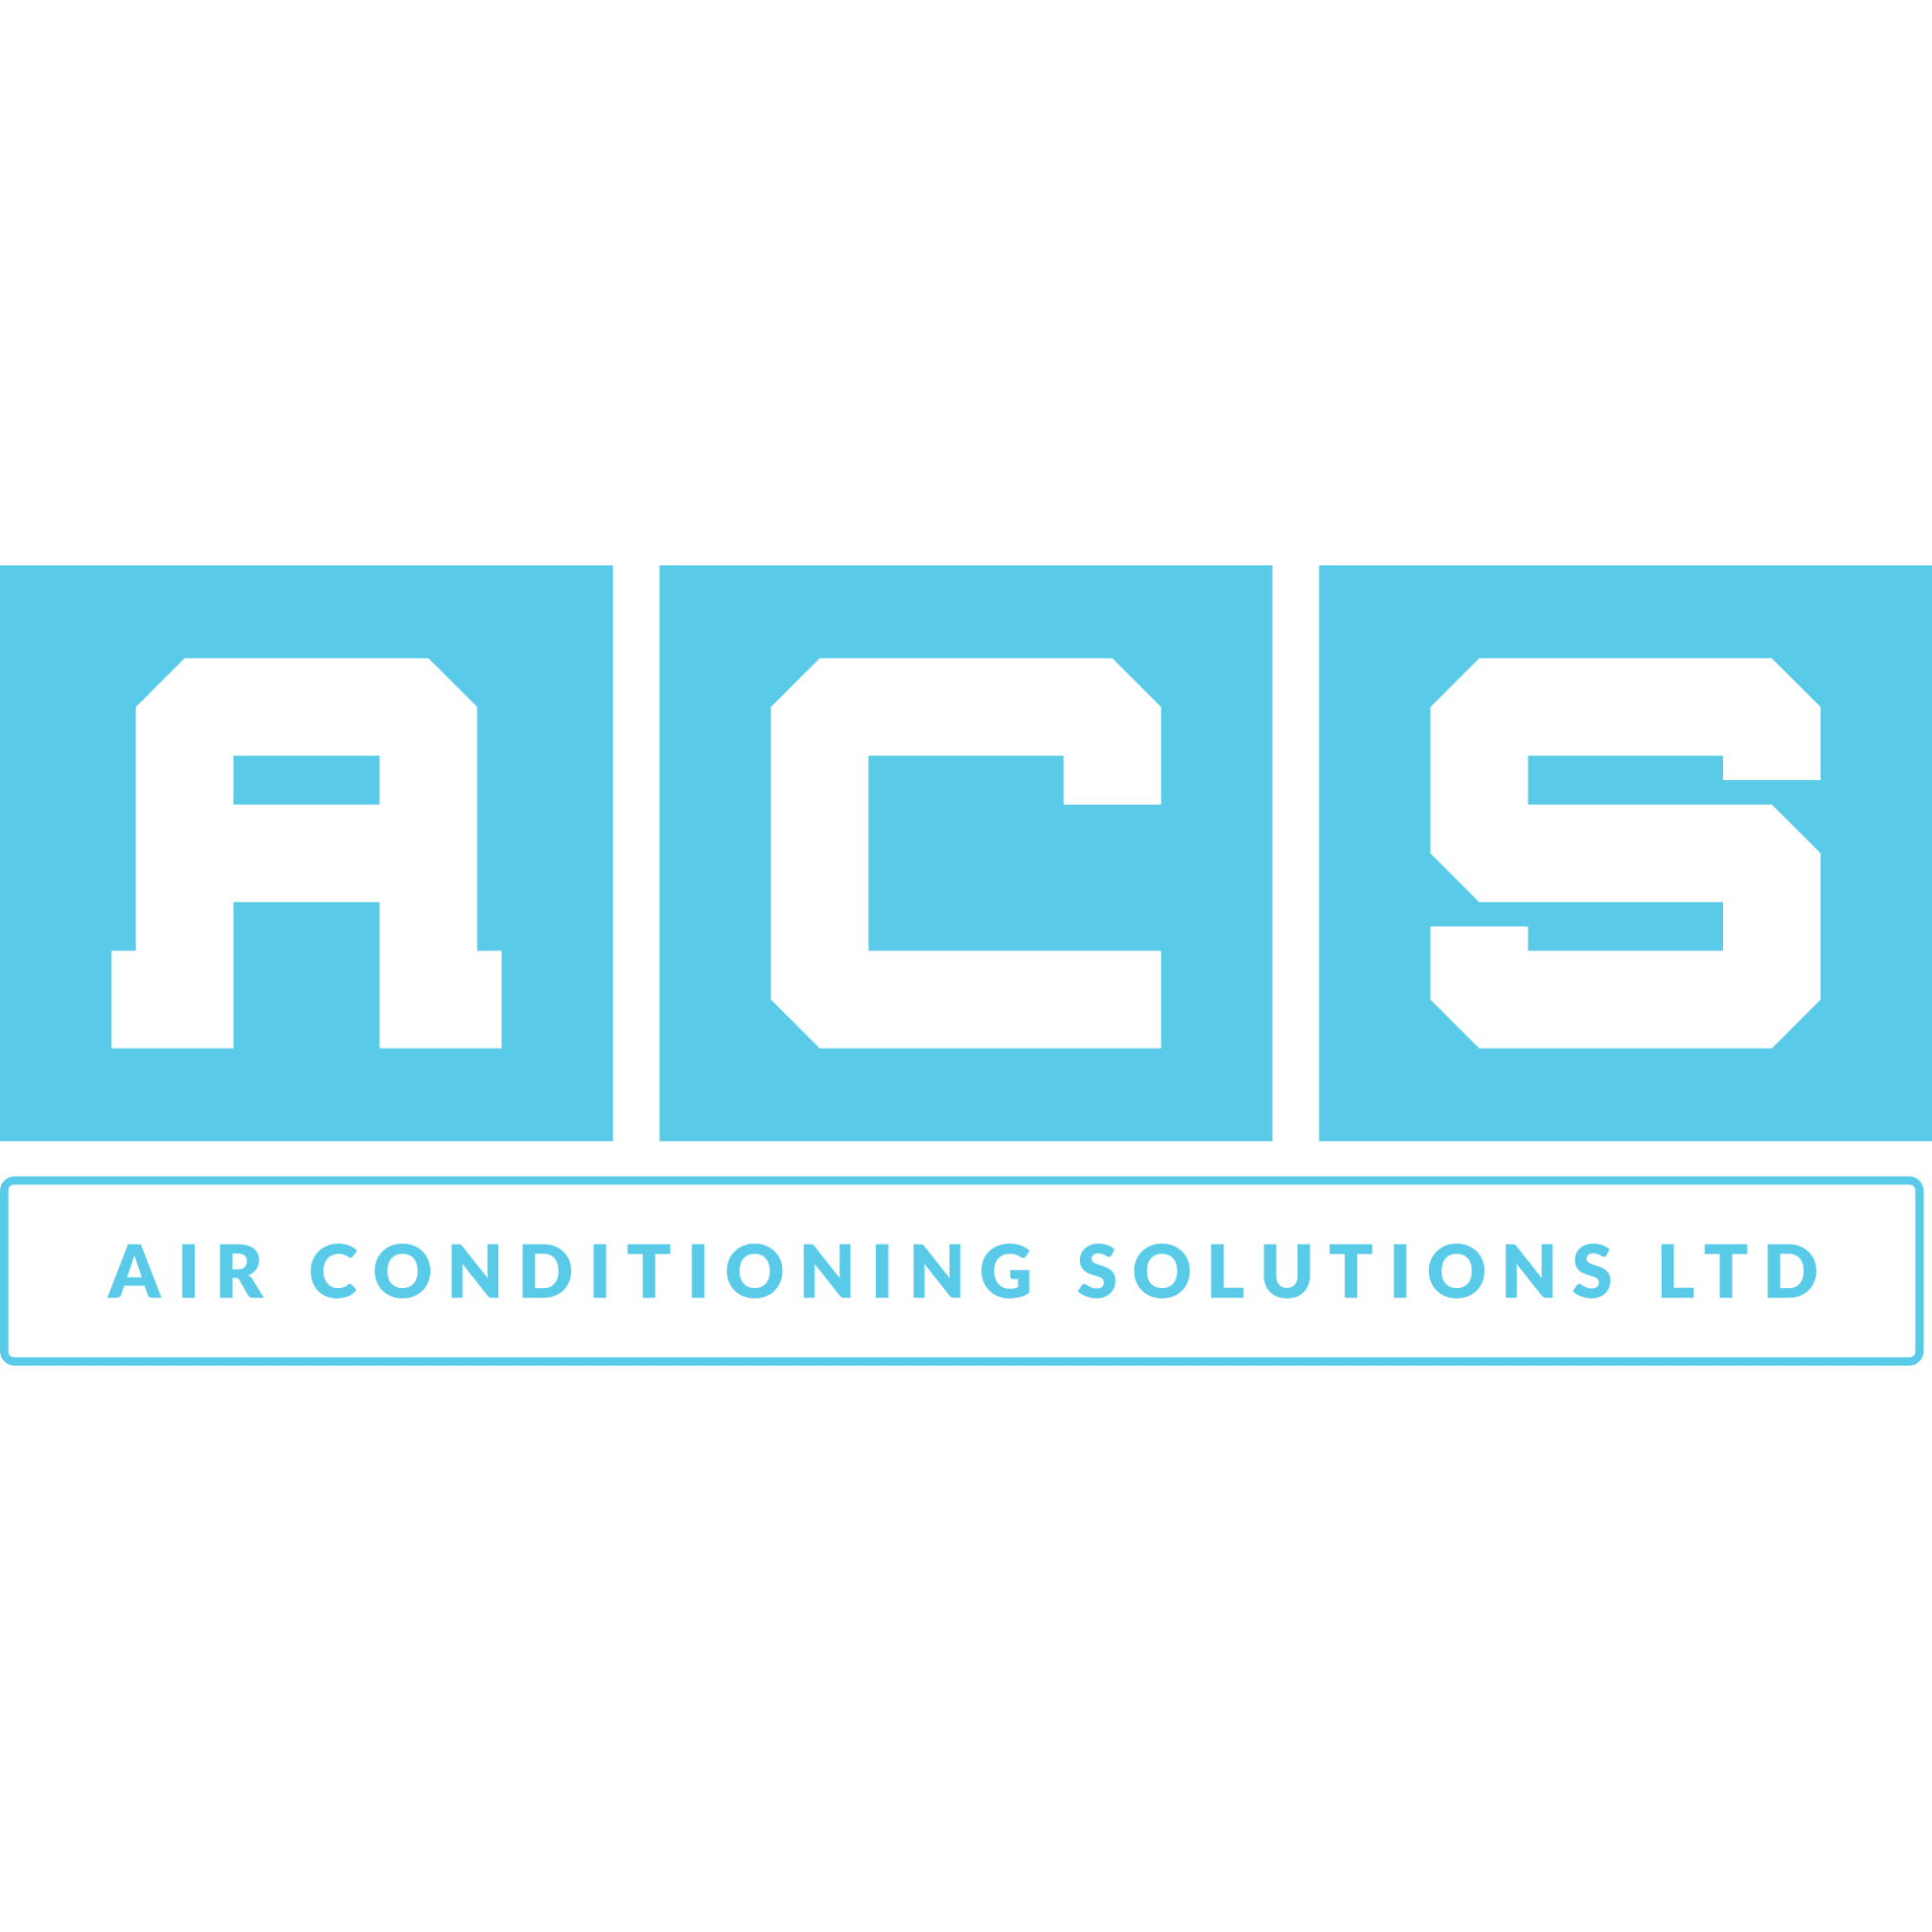 Air Conditioning Solutions Ltd Logo